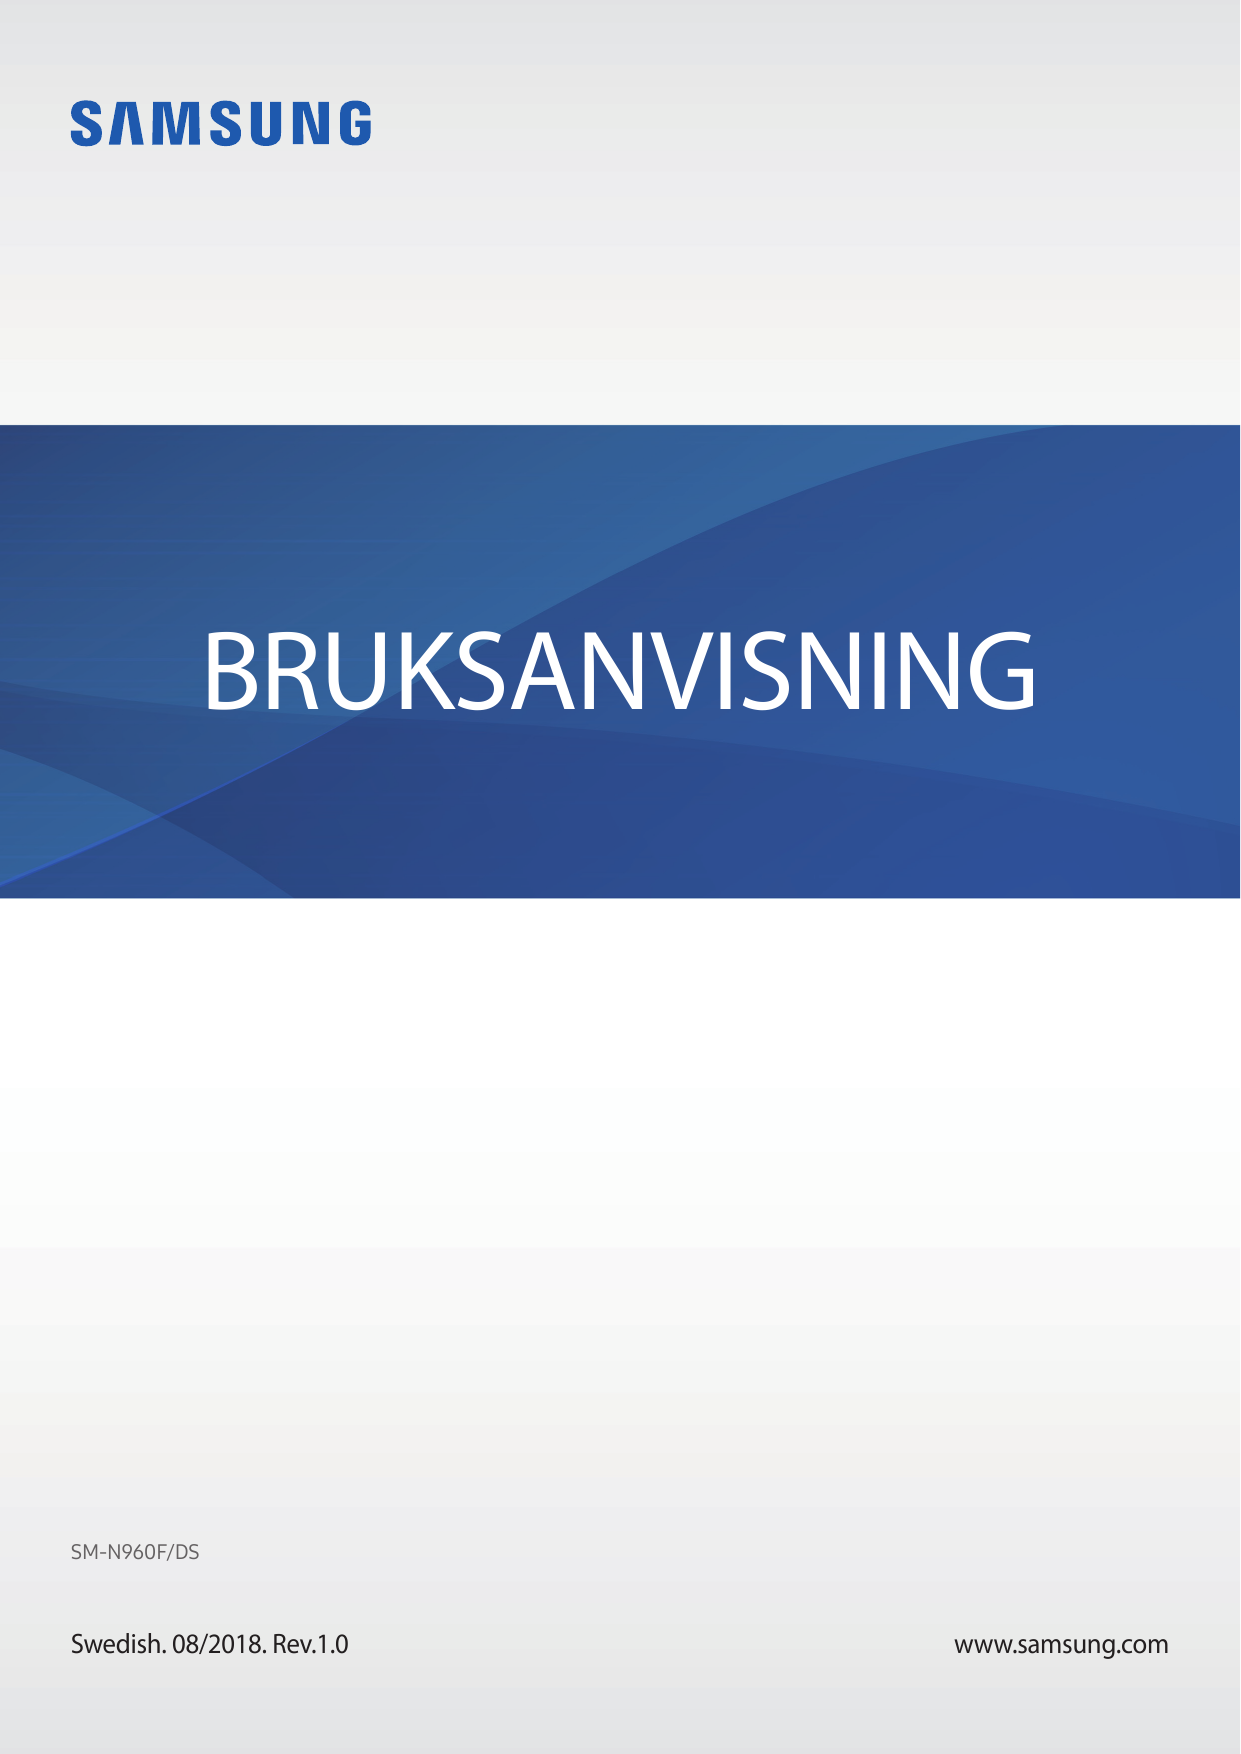 BRUKSANVISNINGSM-N960F/DSSwedish. 08/2018. Rev.1.0www.samsung.com